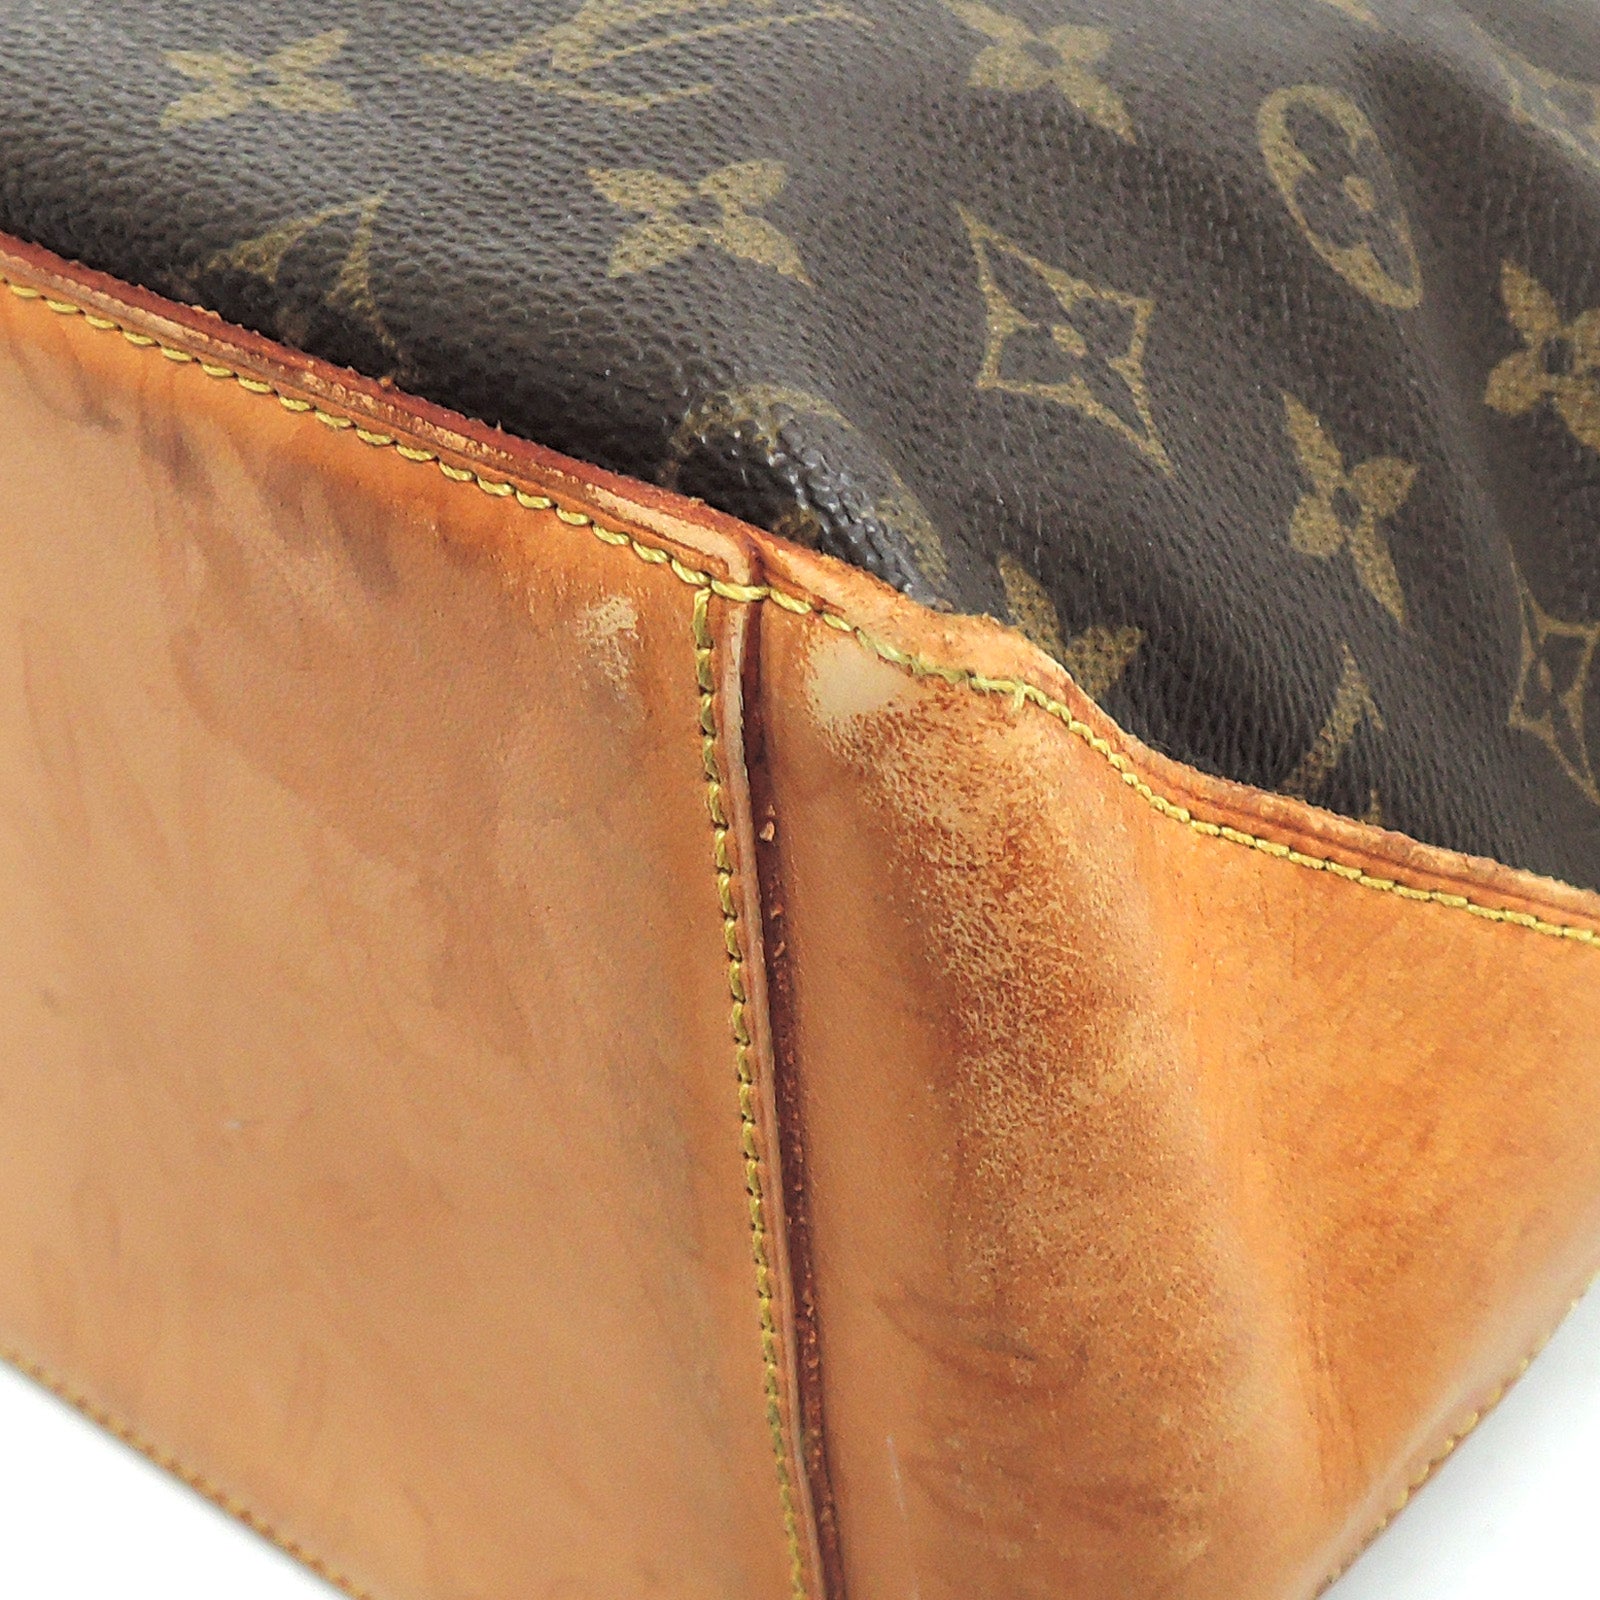 Louis Vuitton Cabas Leather Tote Bag